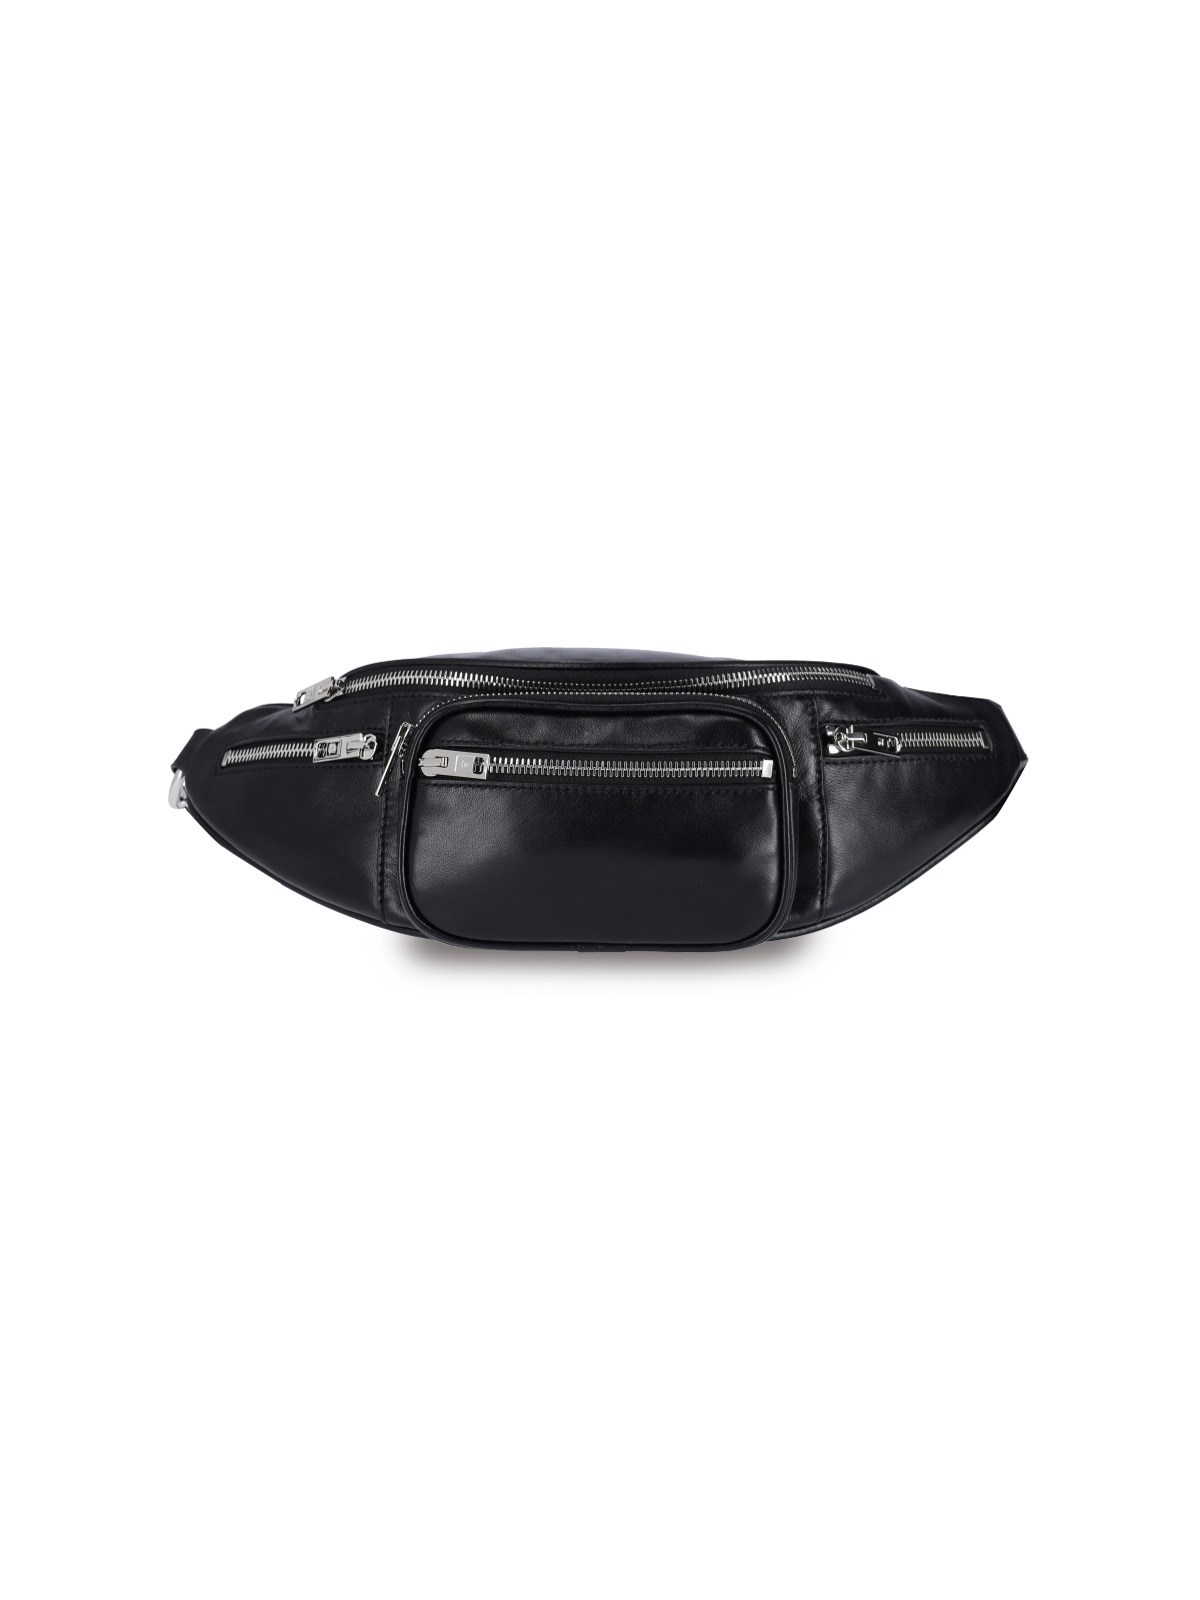 Alexander wang 'attica' belt bag available on SUGAR - 144969